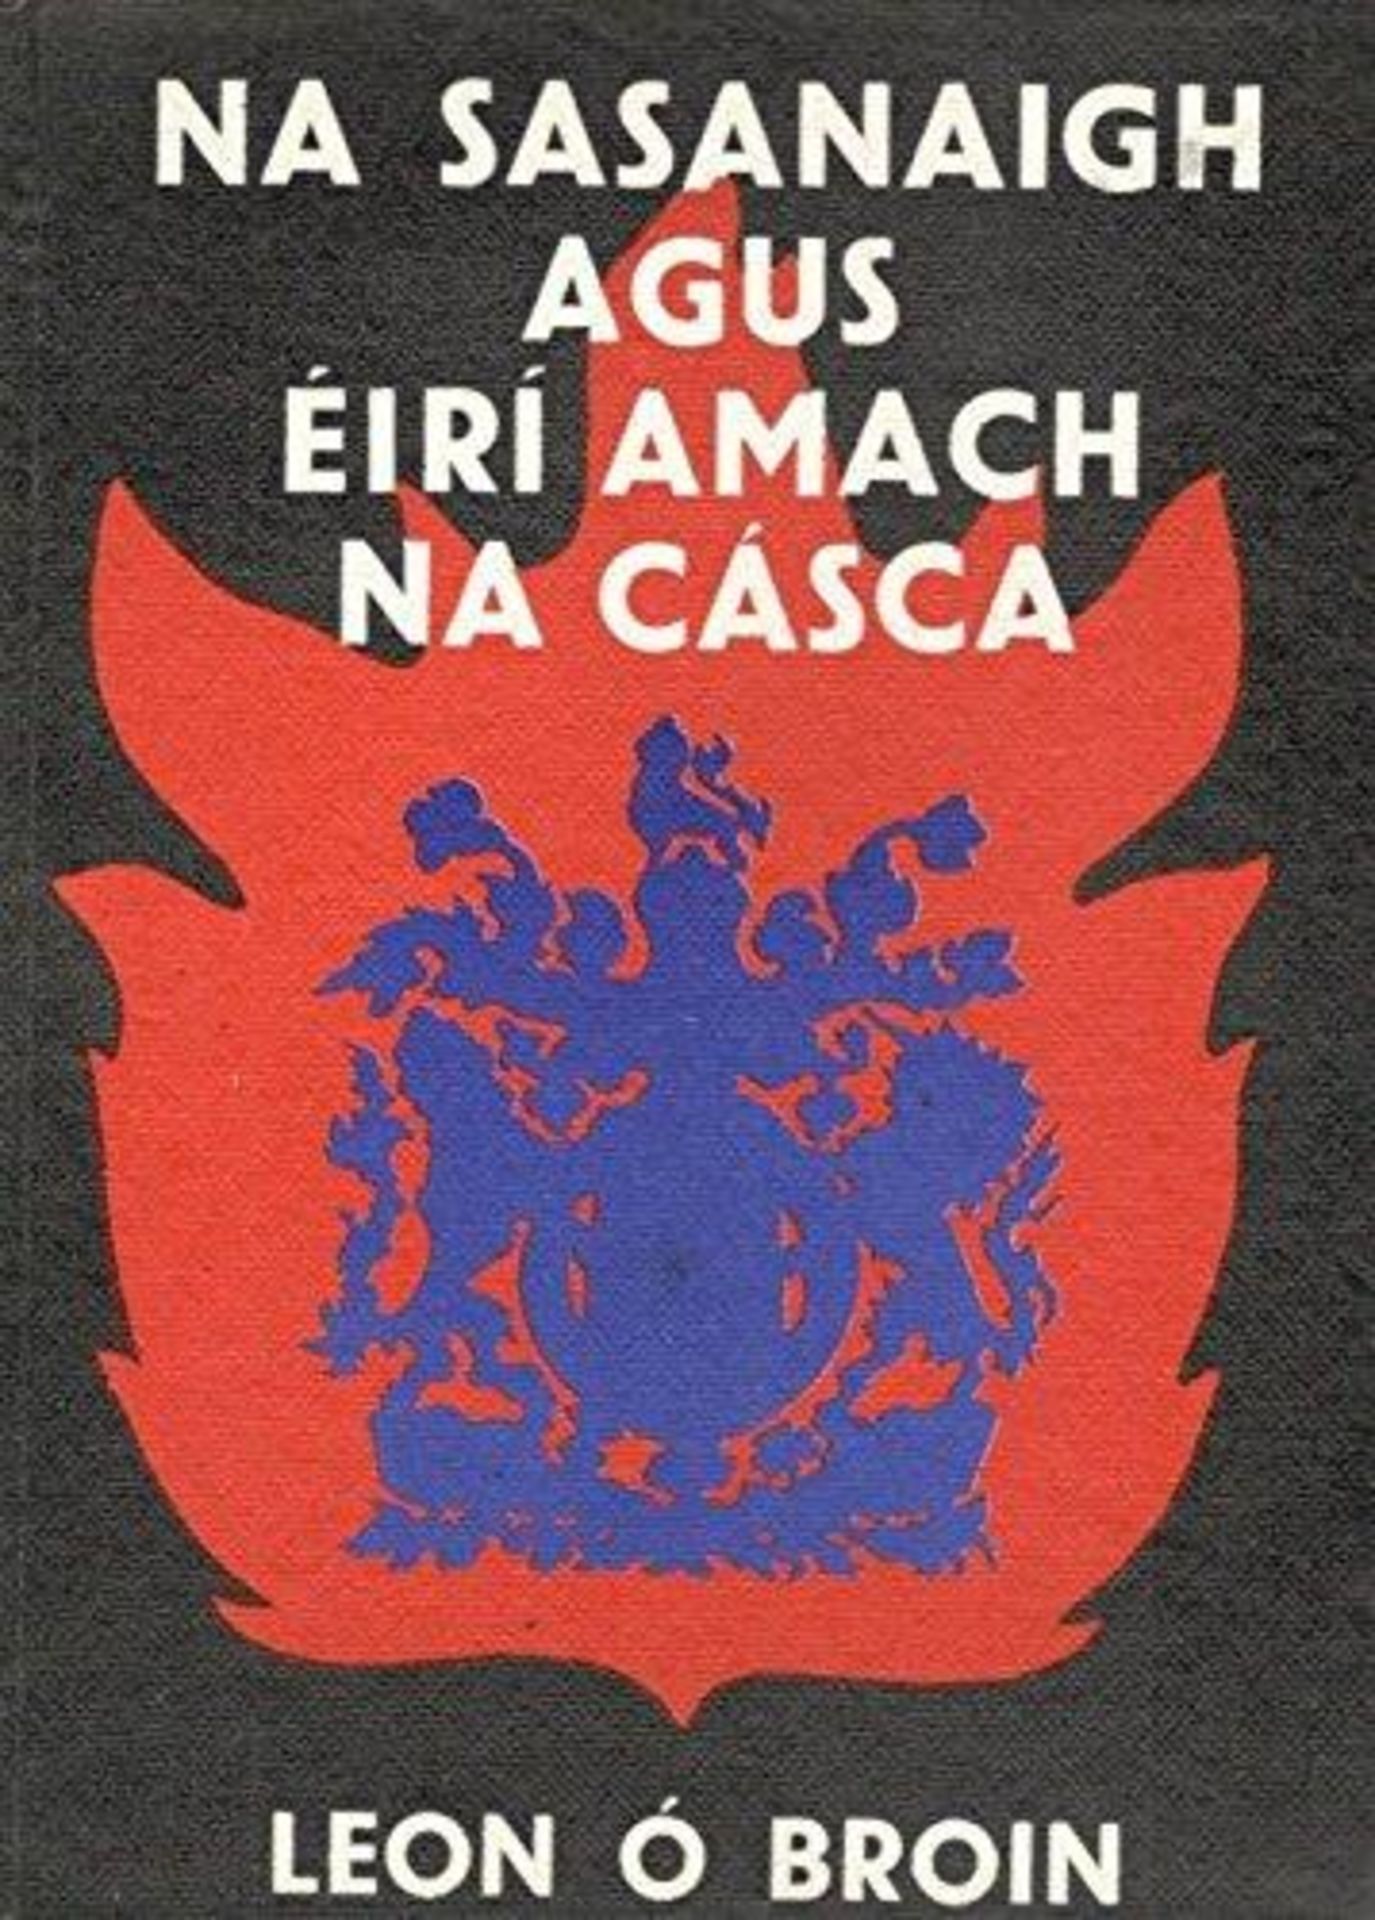 Easter Rising & The English Sinn Fein Rebellion Rare Book In Gaelic